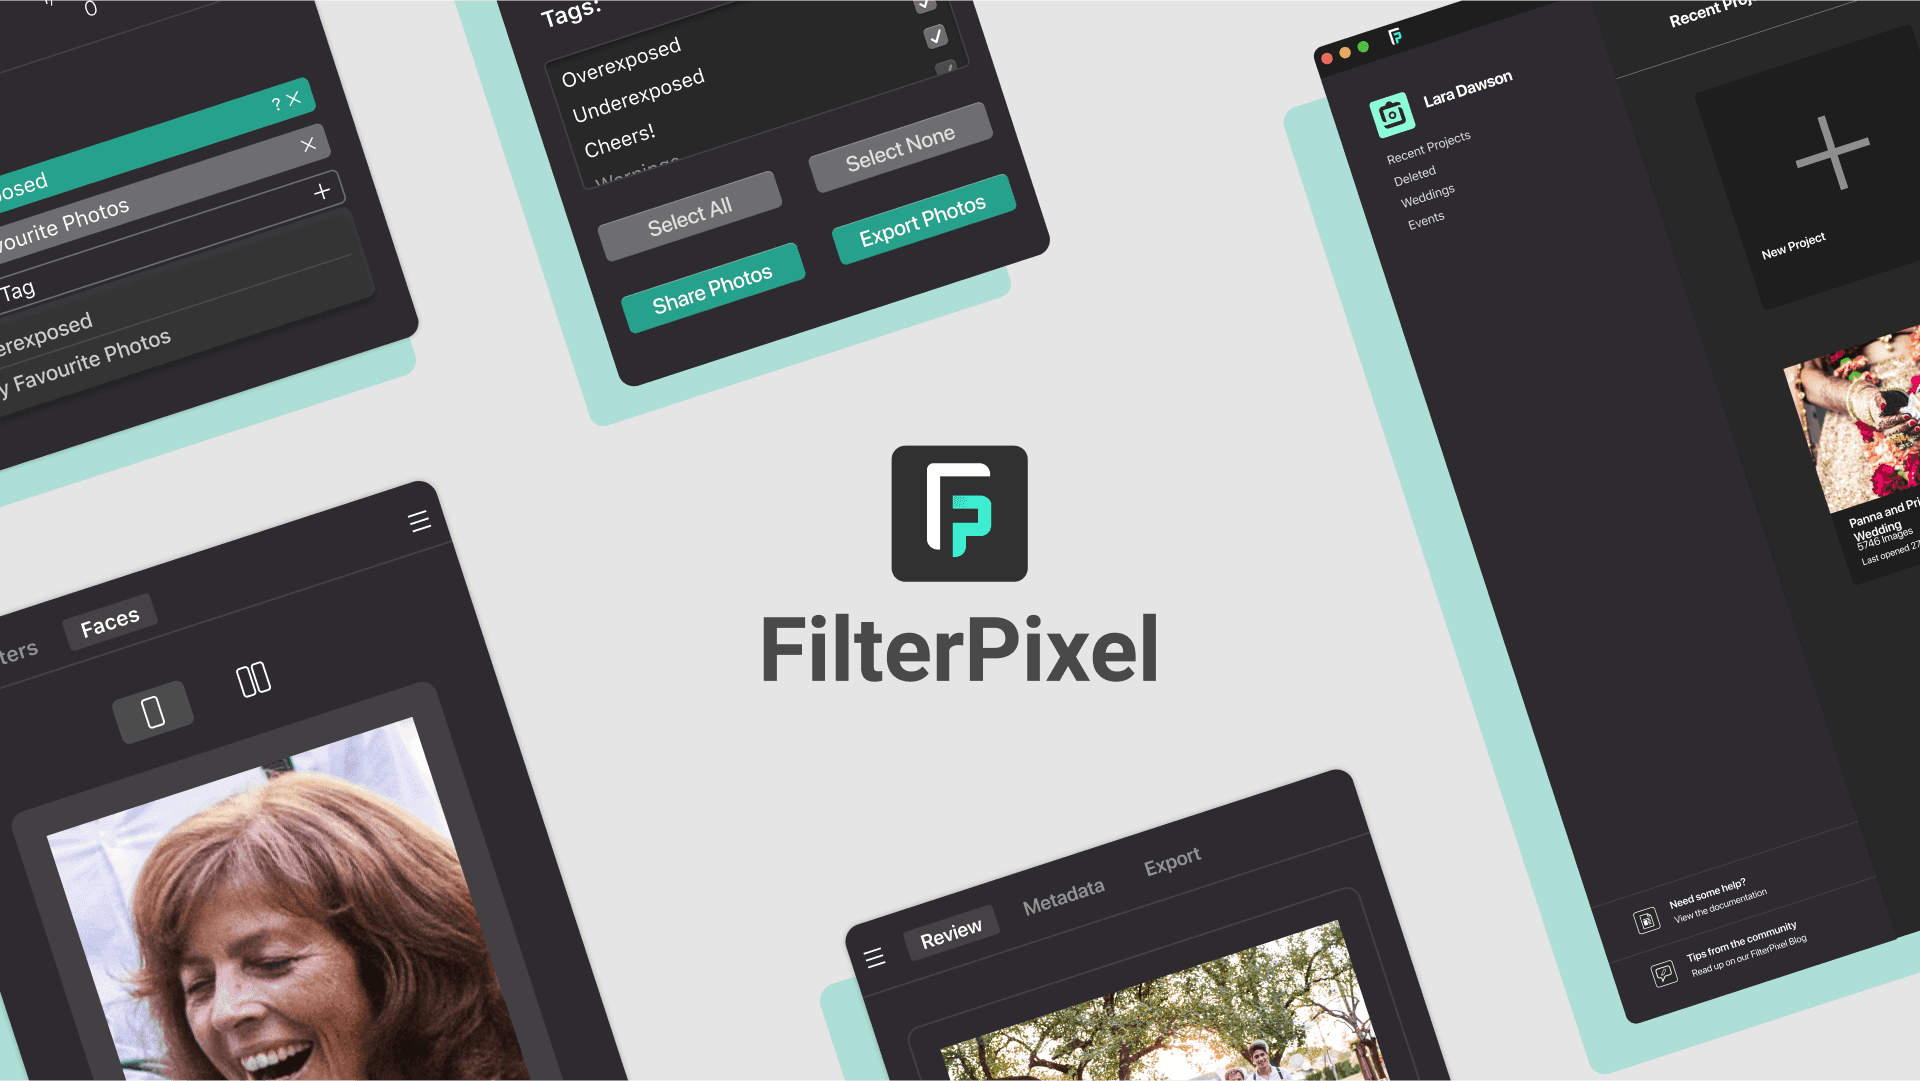 FilterPixel